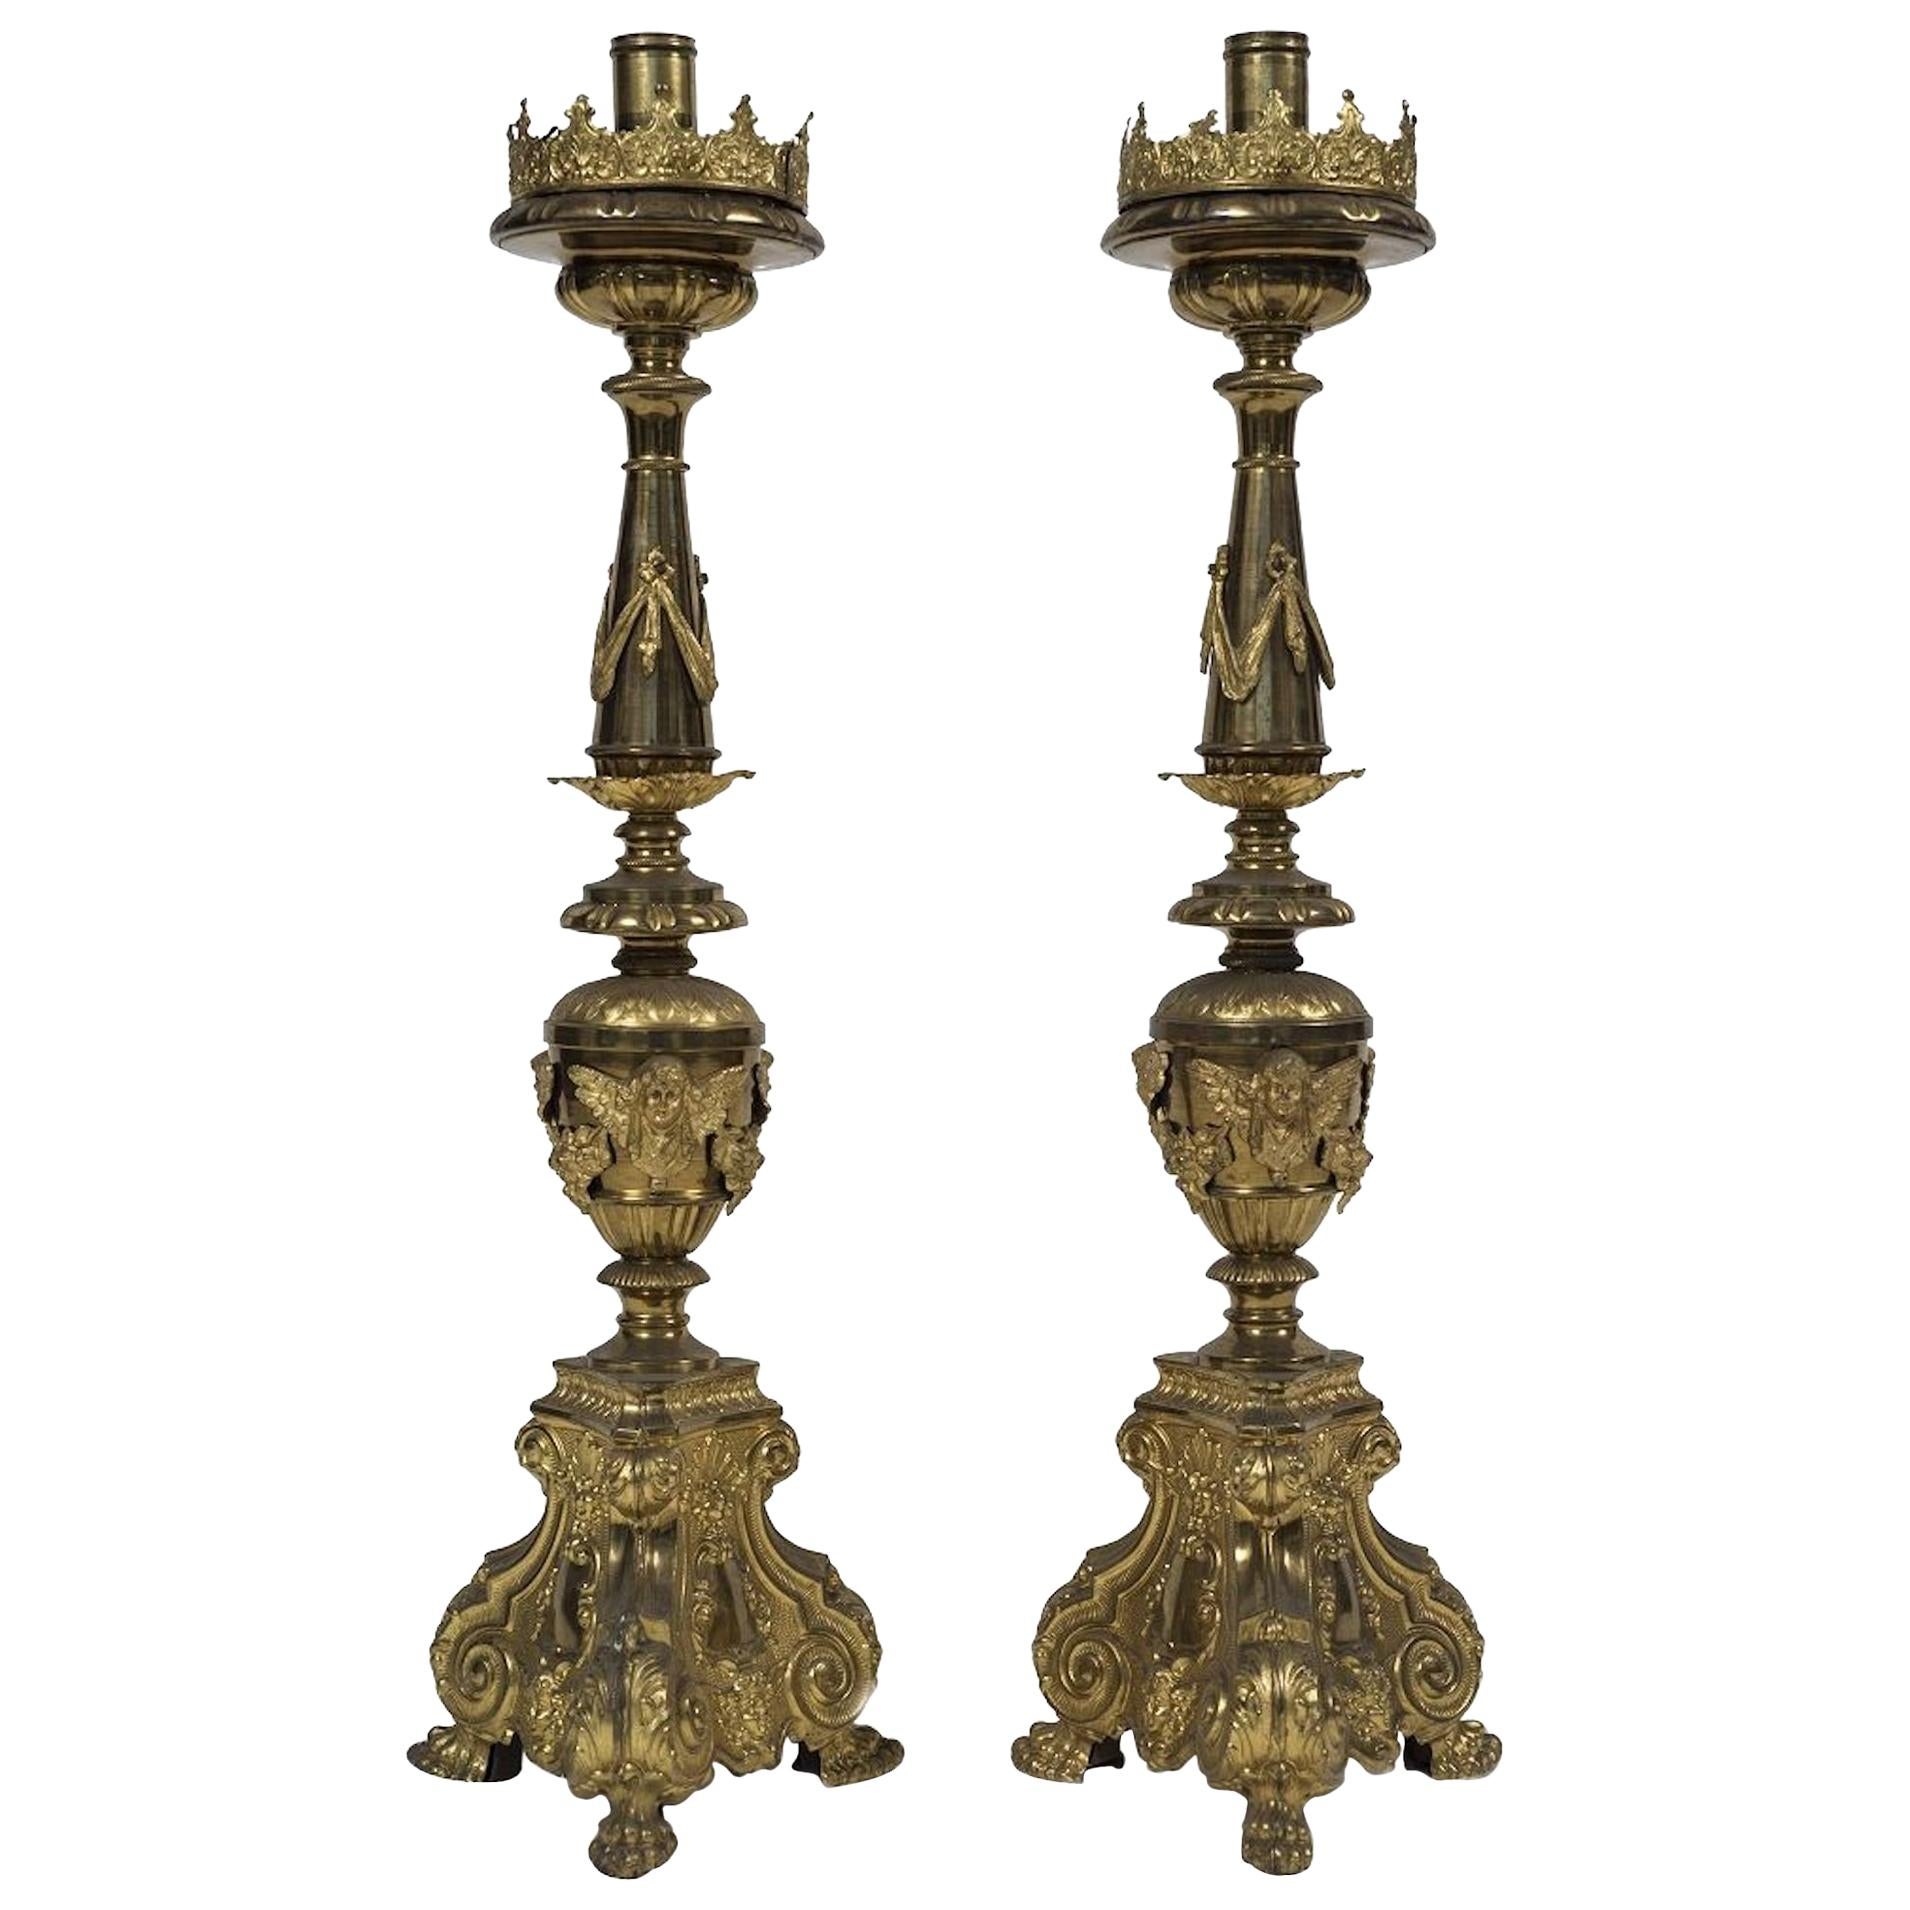 Vintage Pair of Candlesticks, Italian Baroque Style, 18th Century